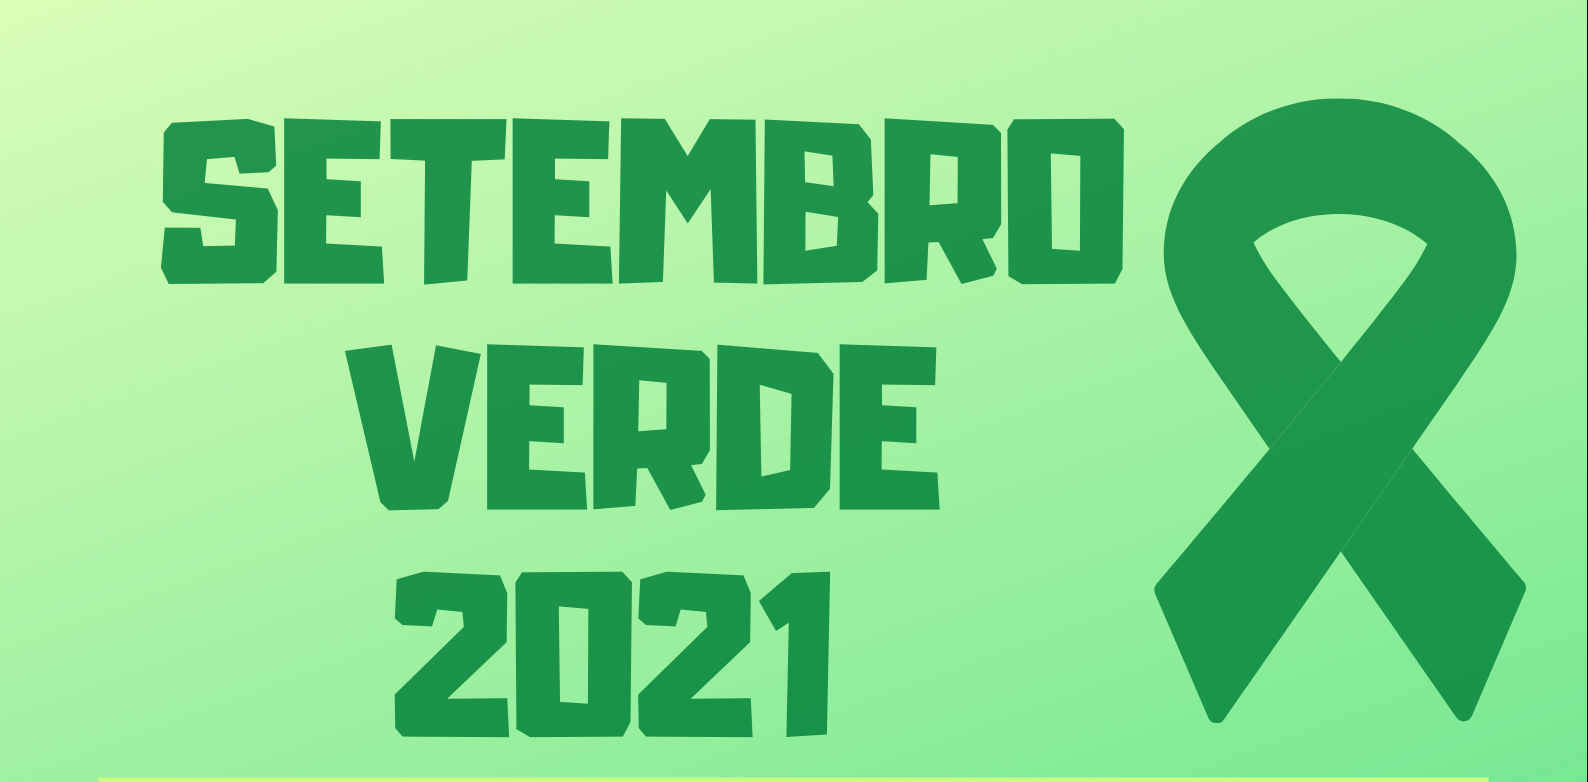 Setembro-verde-2021-e1631560902810.png